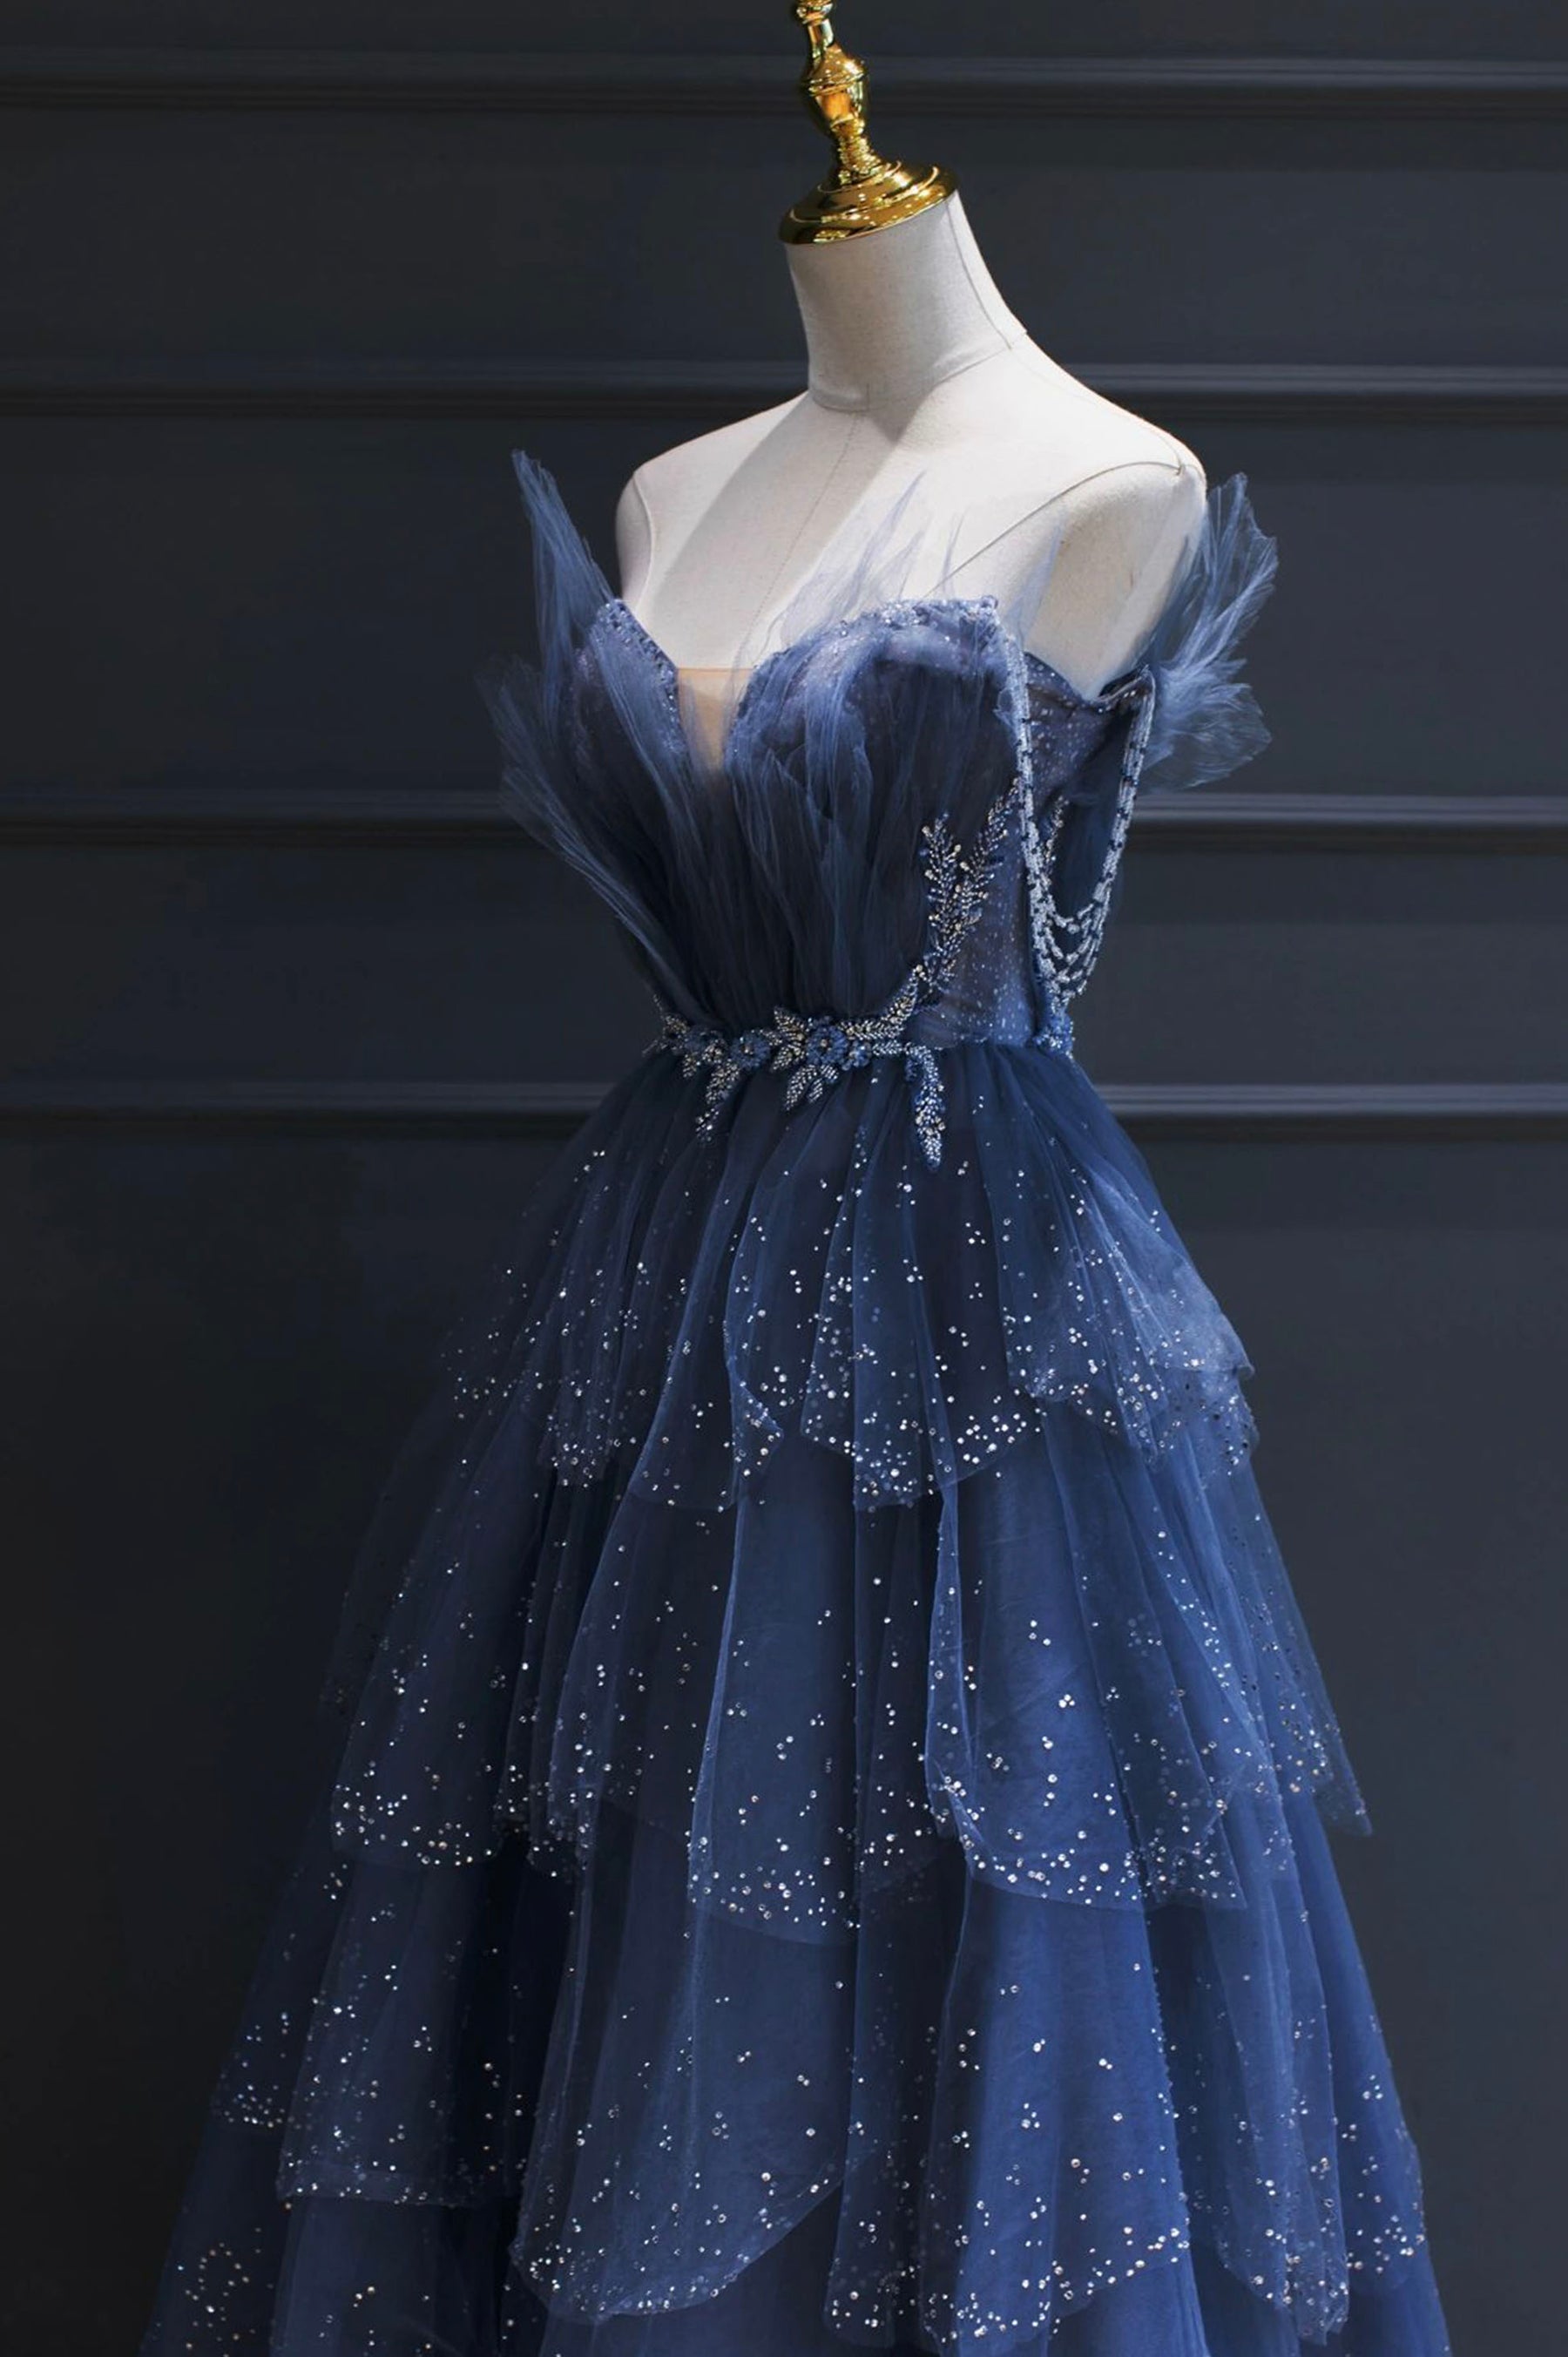 The secret black dress | Take a quiz, get a fantasy ball gown - Quiz |  Quotev